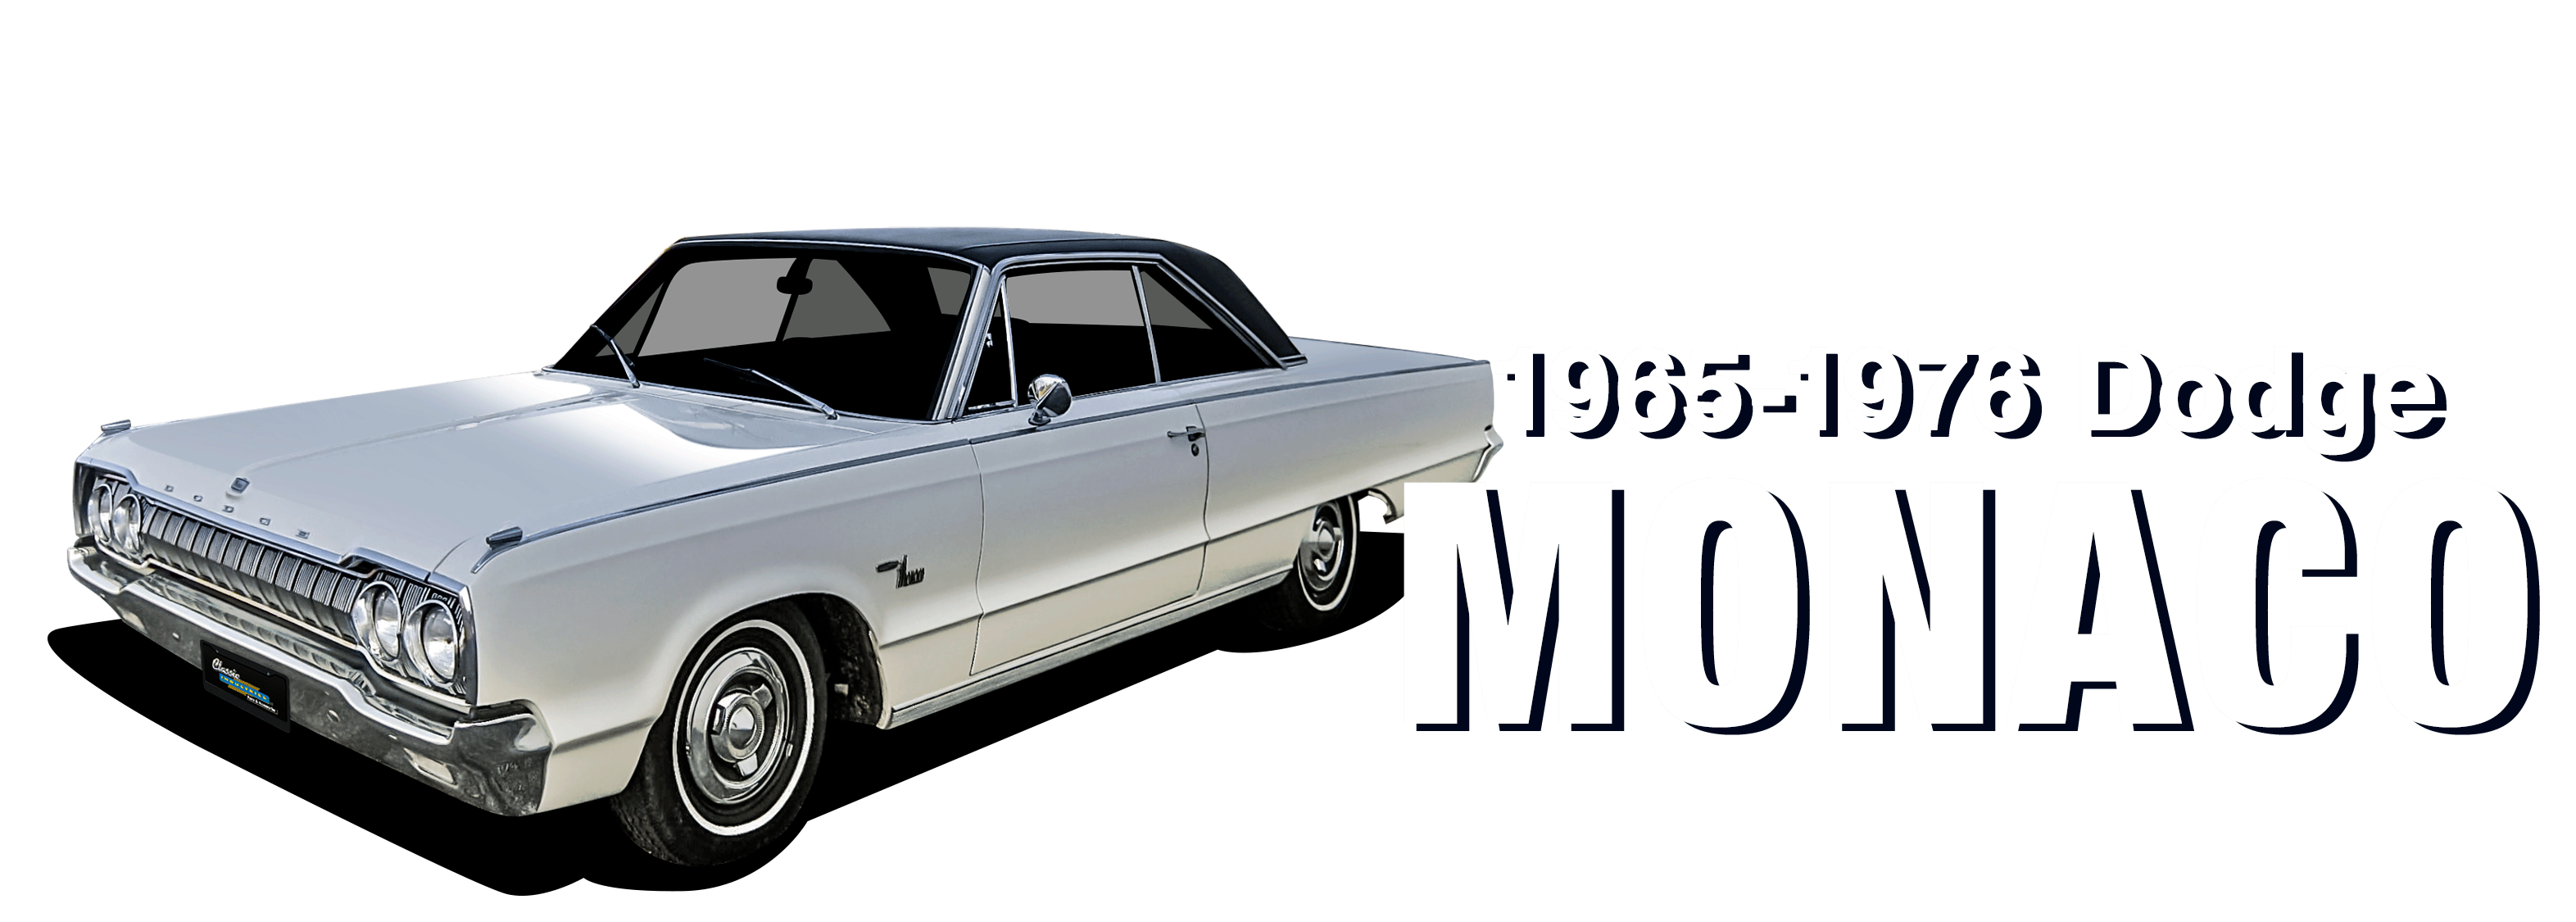 65-76Dodge-Monaco-vehicle-desktop